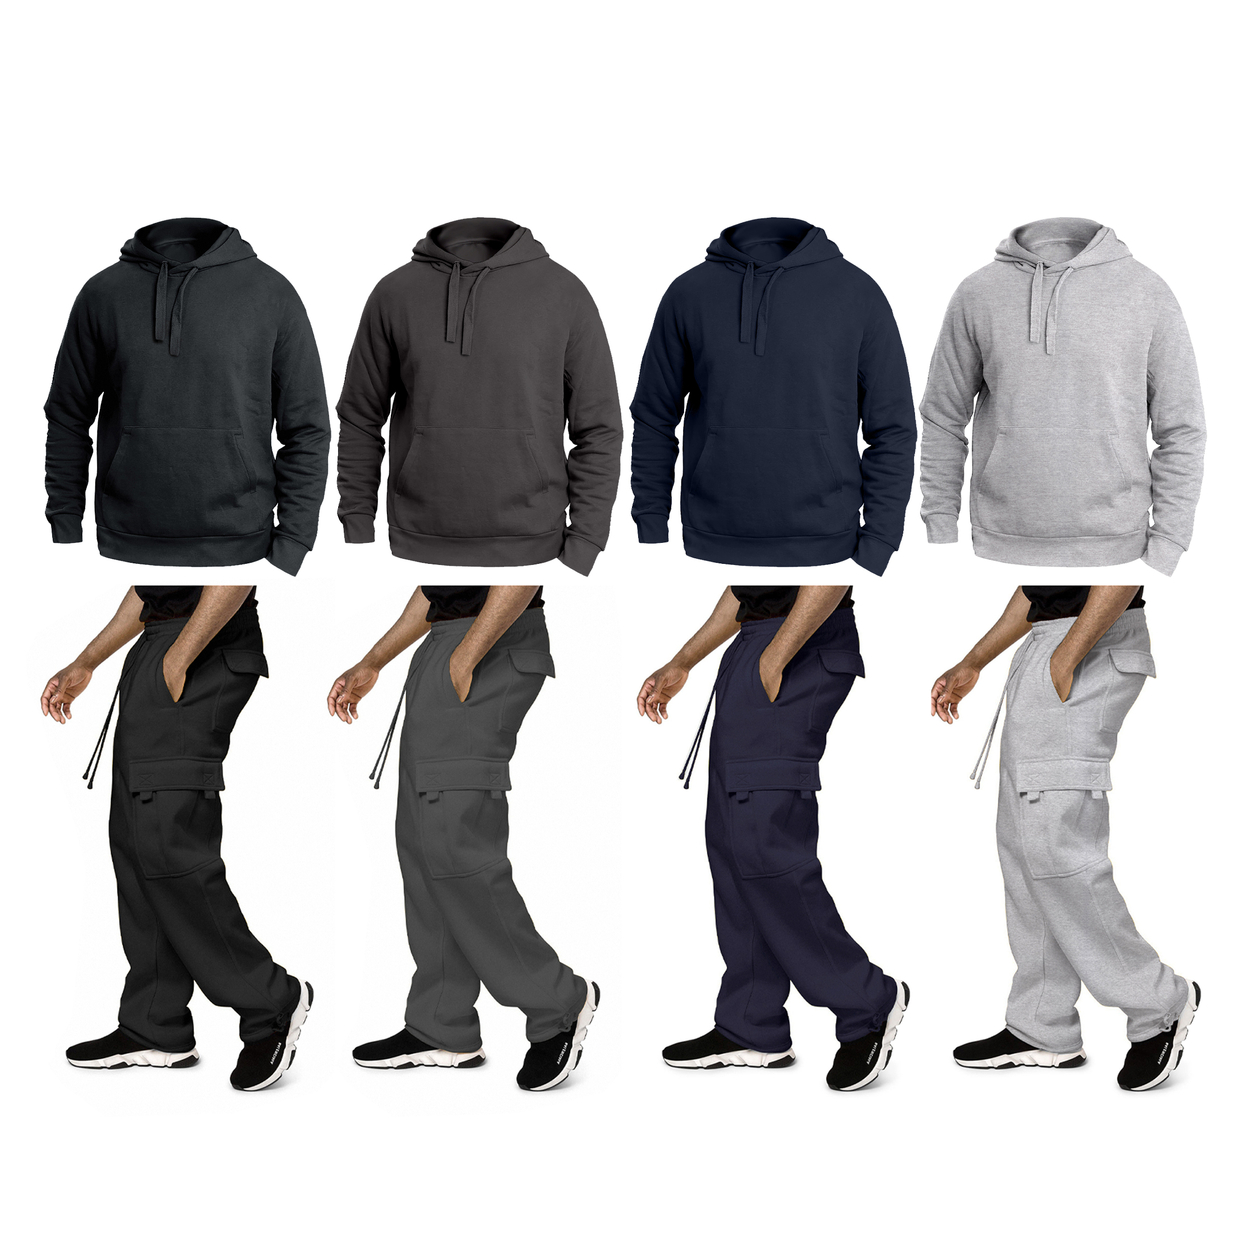 Multi-Pack: Big & Tall Men's Winter Warm Cozy Athletic Fleece Lined Multi-Pocket Cargo Sweatsuit - Black, 1-pack, X-large